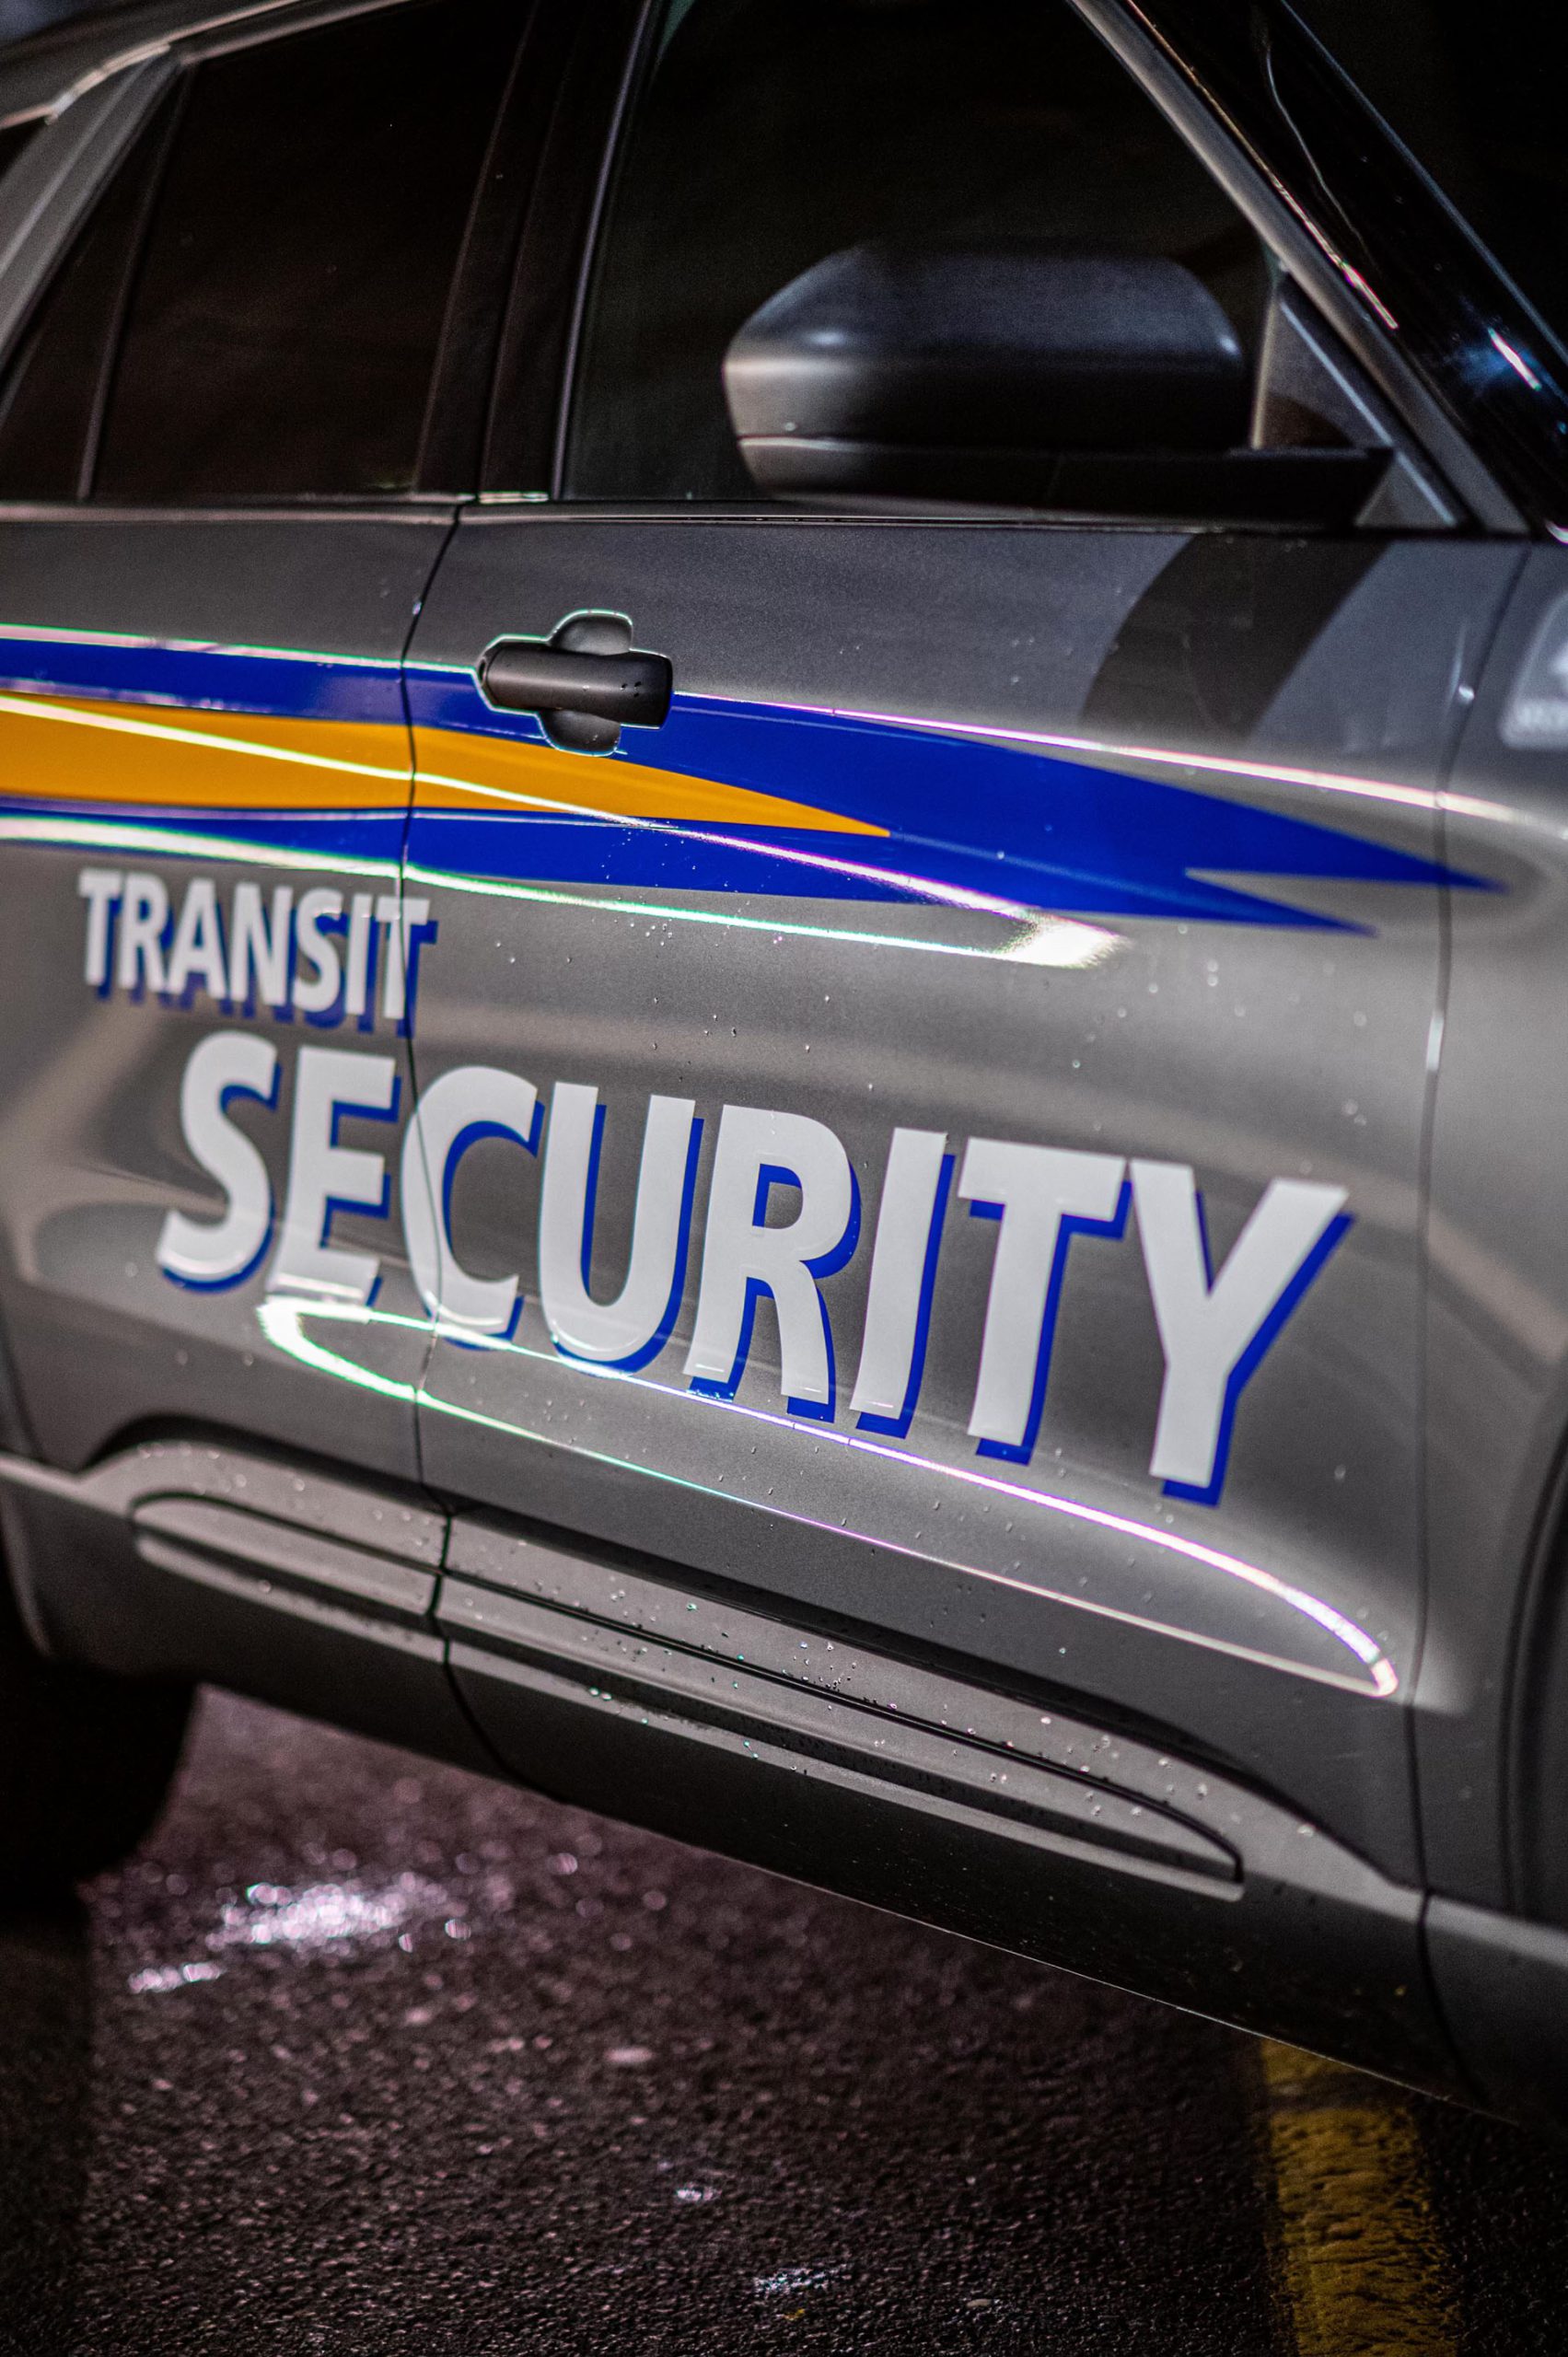 New Transit Security hybrid patrol car